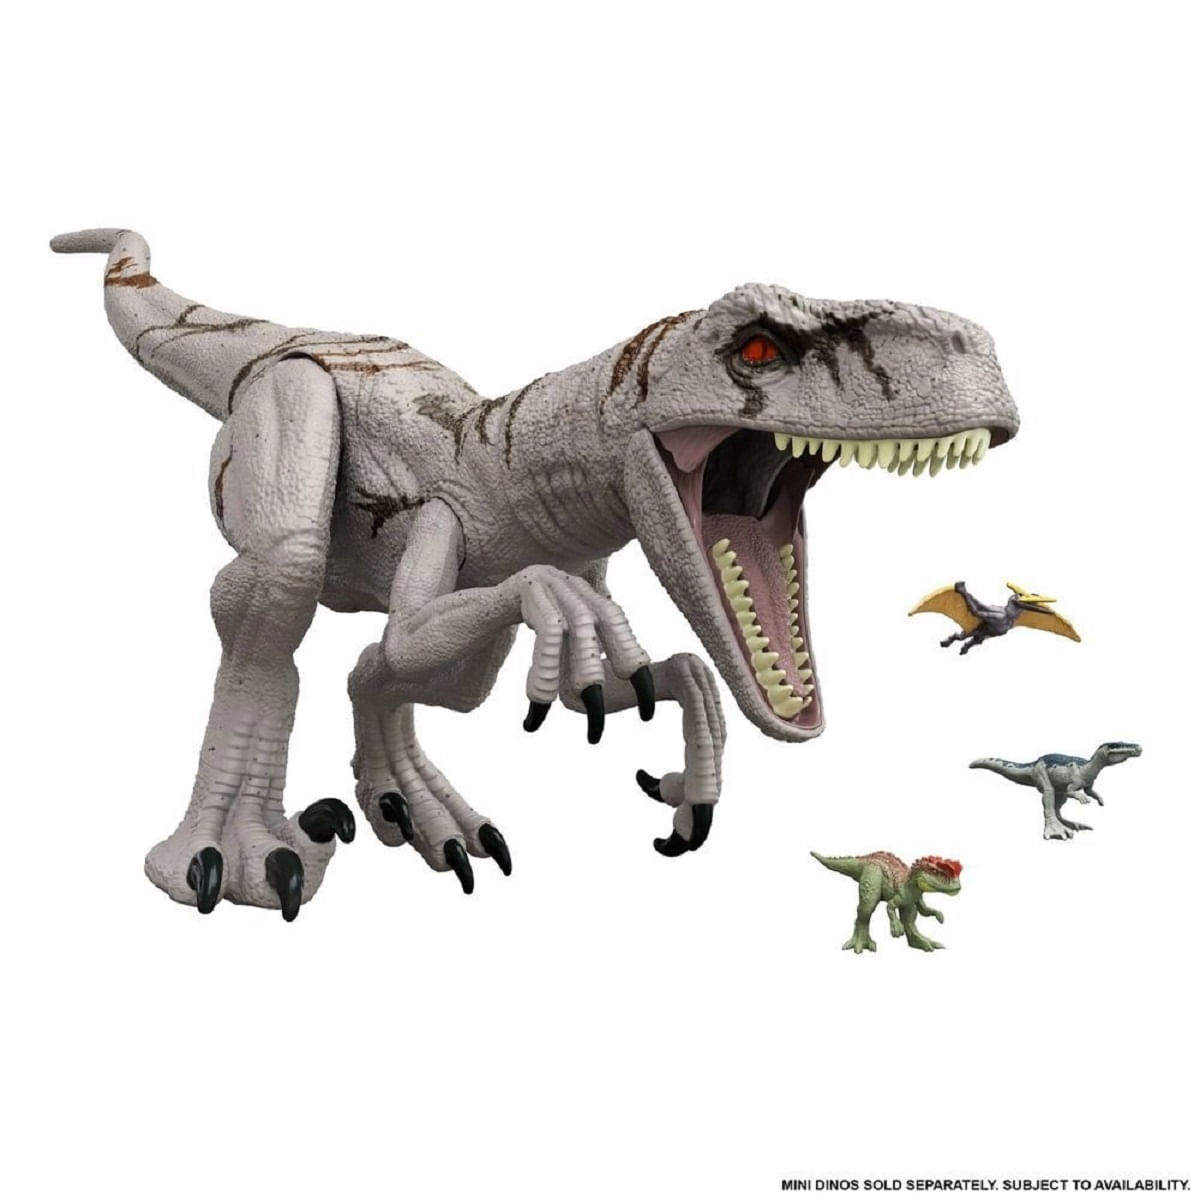 Kit Dino T-Rex Jurassic World + Jogo Quebra Cabeça 30 Peças